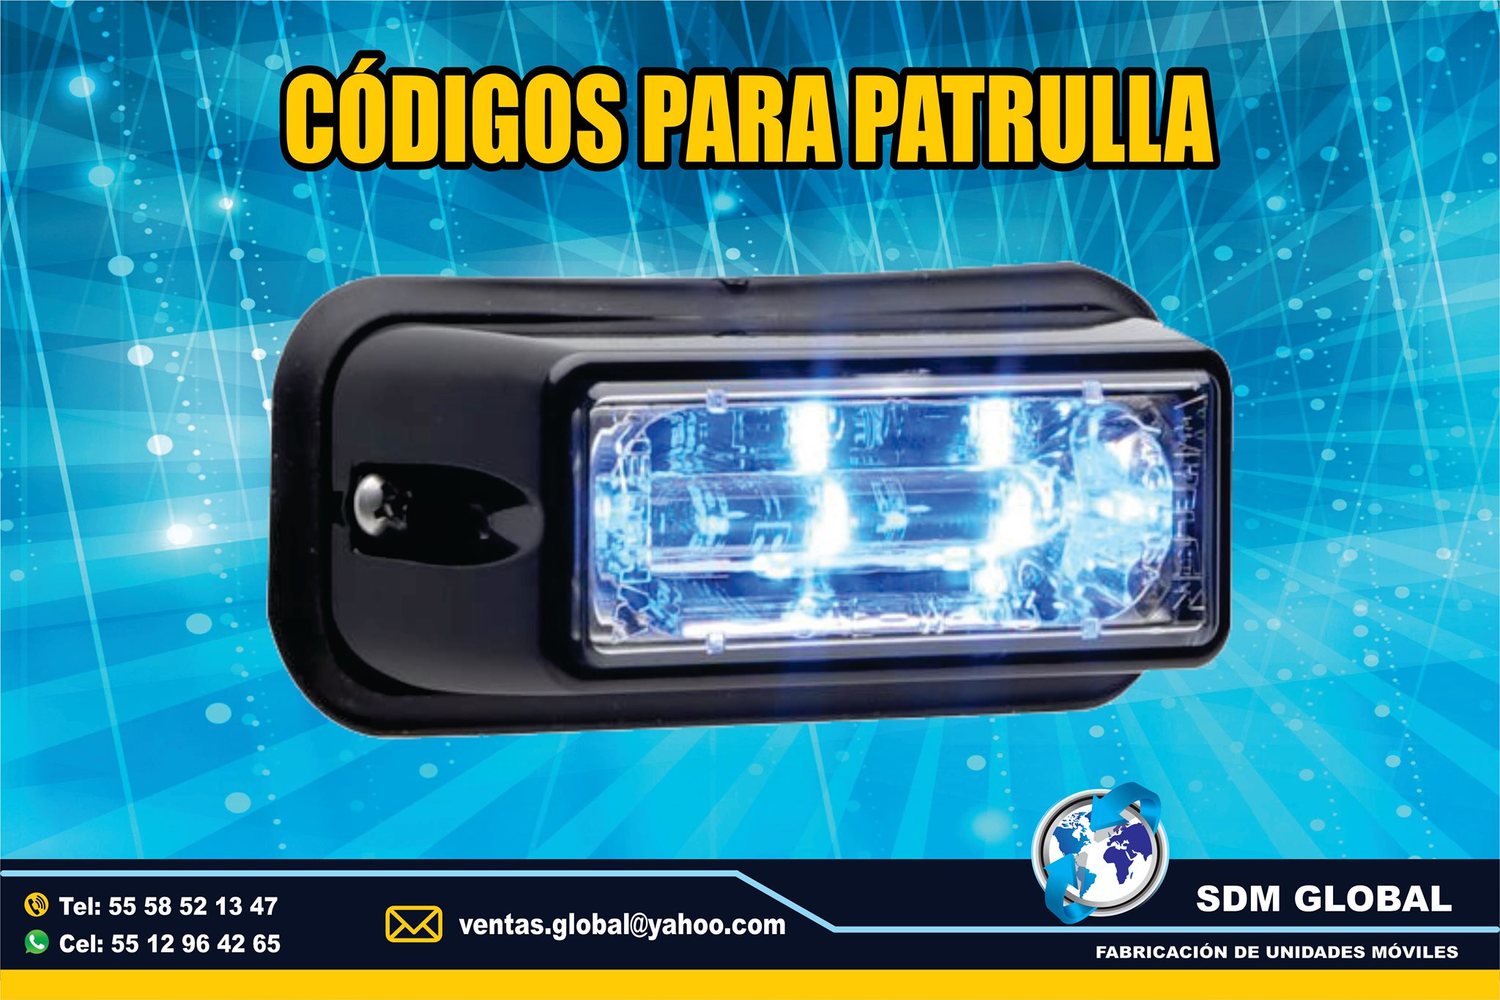 <span style="font-weight: bold;">Venta de Codigos Estrobos y Luces para patrullas azul</span><br>